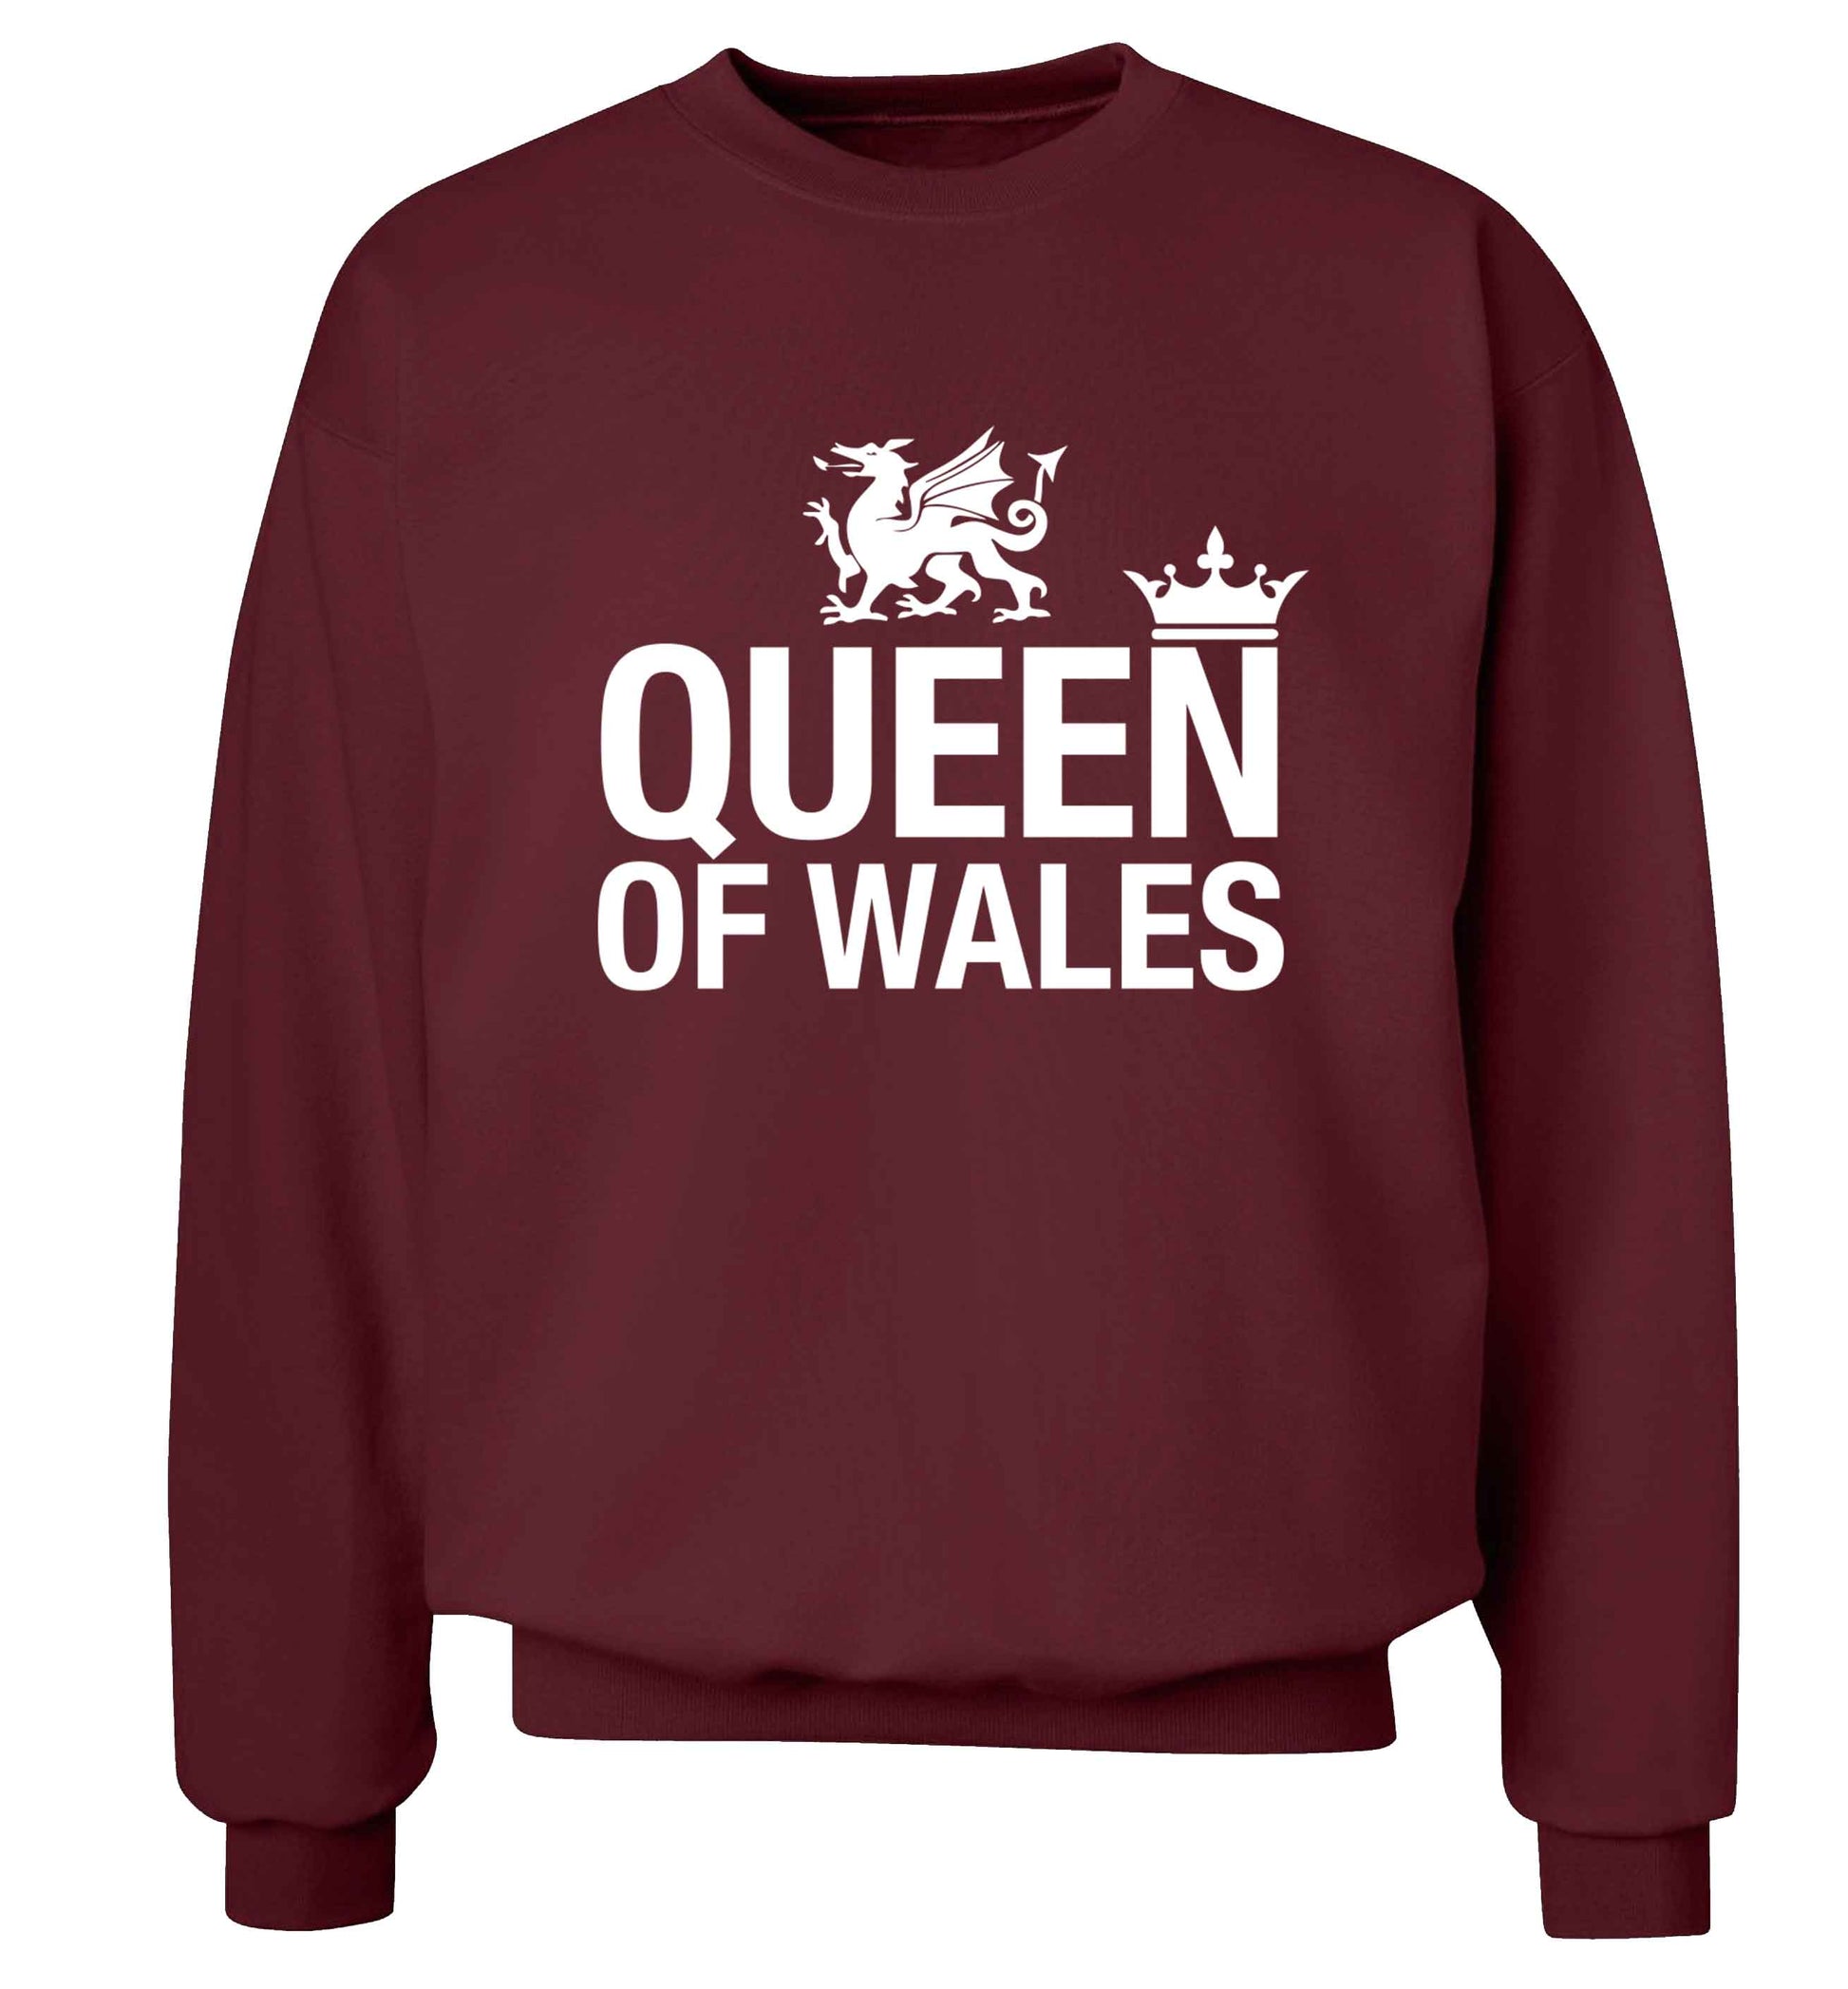 Queen of Wales Adult's unisex maroon Sweater 2XL